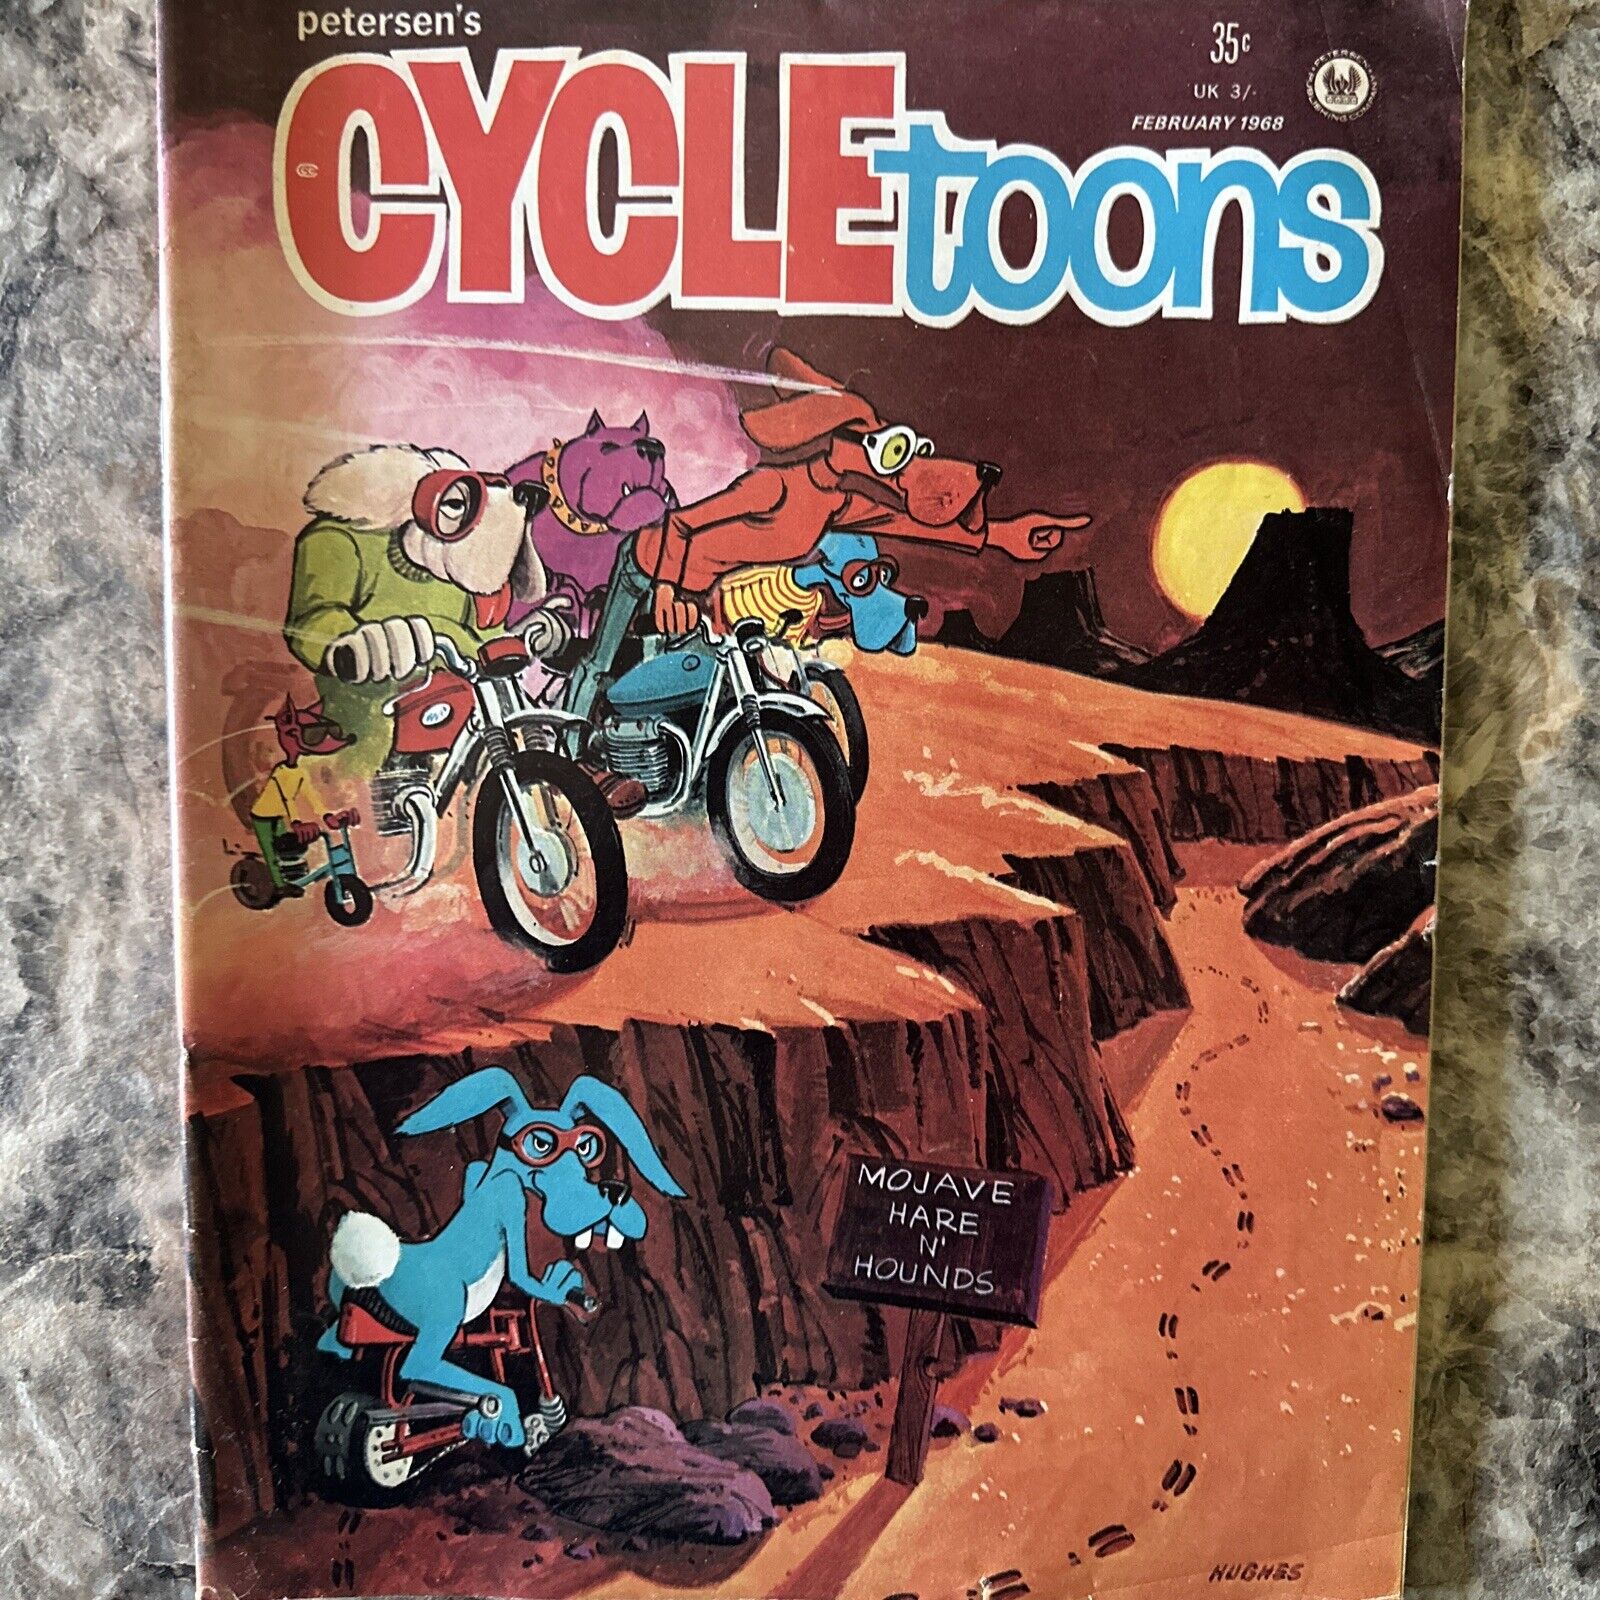 Vintage Petersen’s Cycletoons Comic Book #1 February 1968